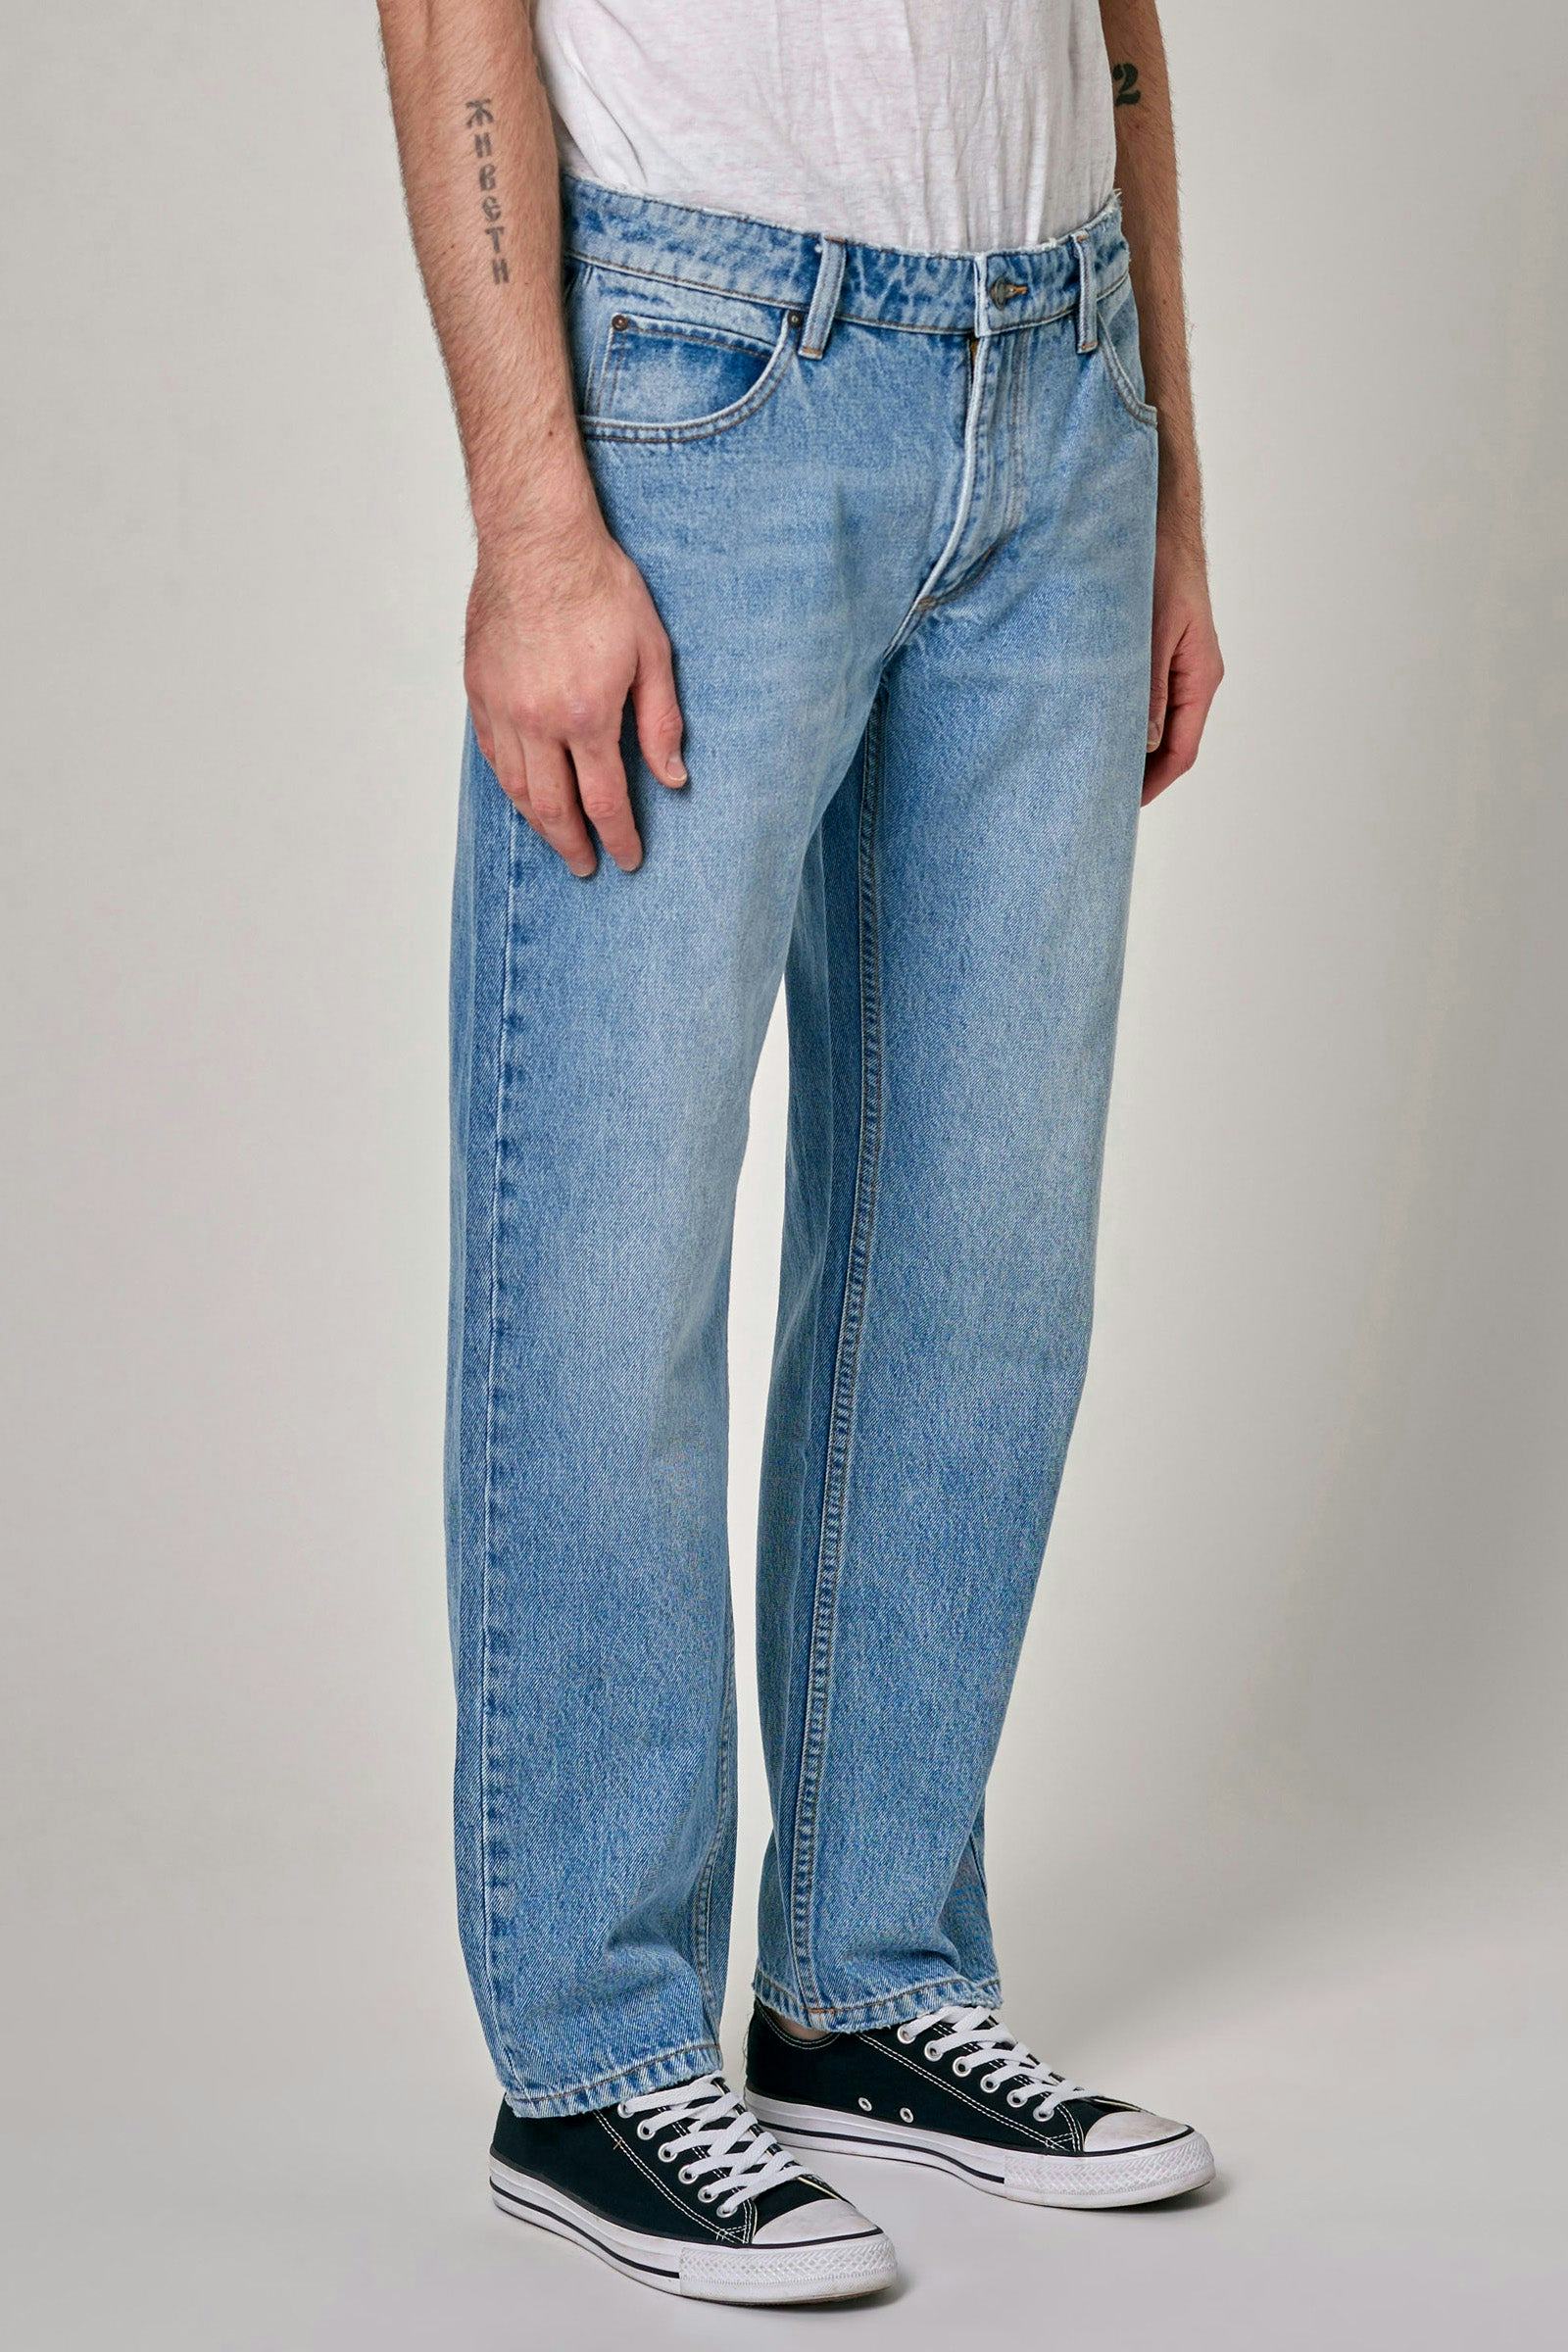 Buy Ezy - Stoner Blue Online | Rollas Jeans